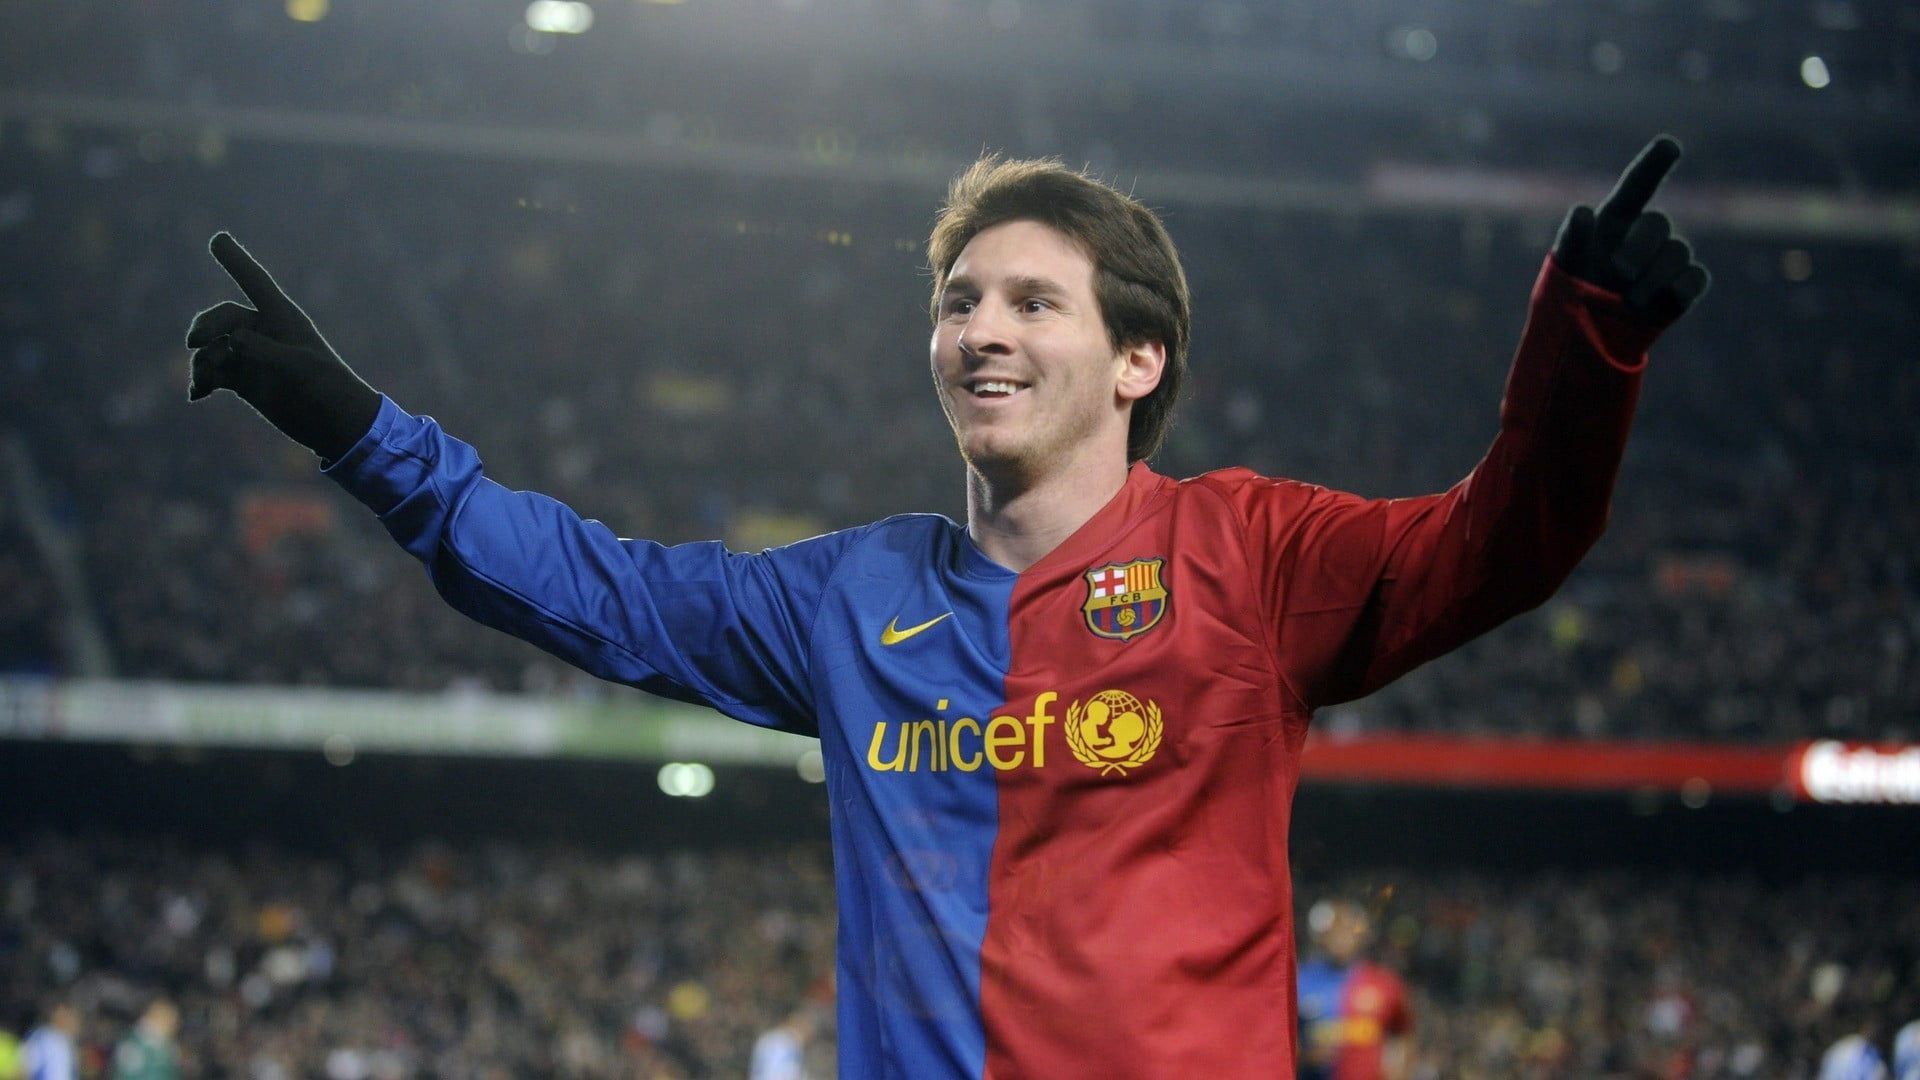 Lionel Messi wallpaper, FC Barcelona, men's red and blue soccer jersey • Wallpaper For You HD Wallpaper For Desktop & Mobile